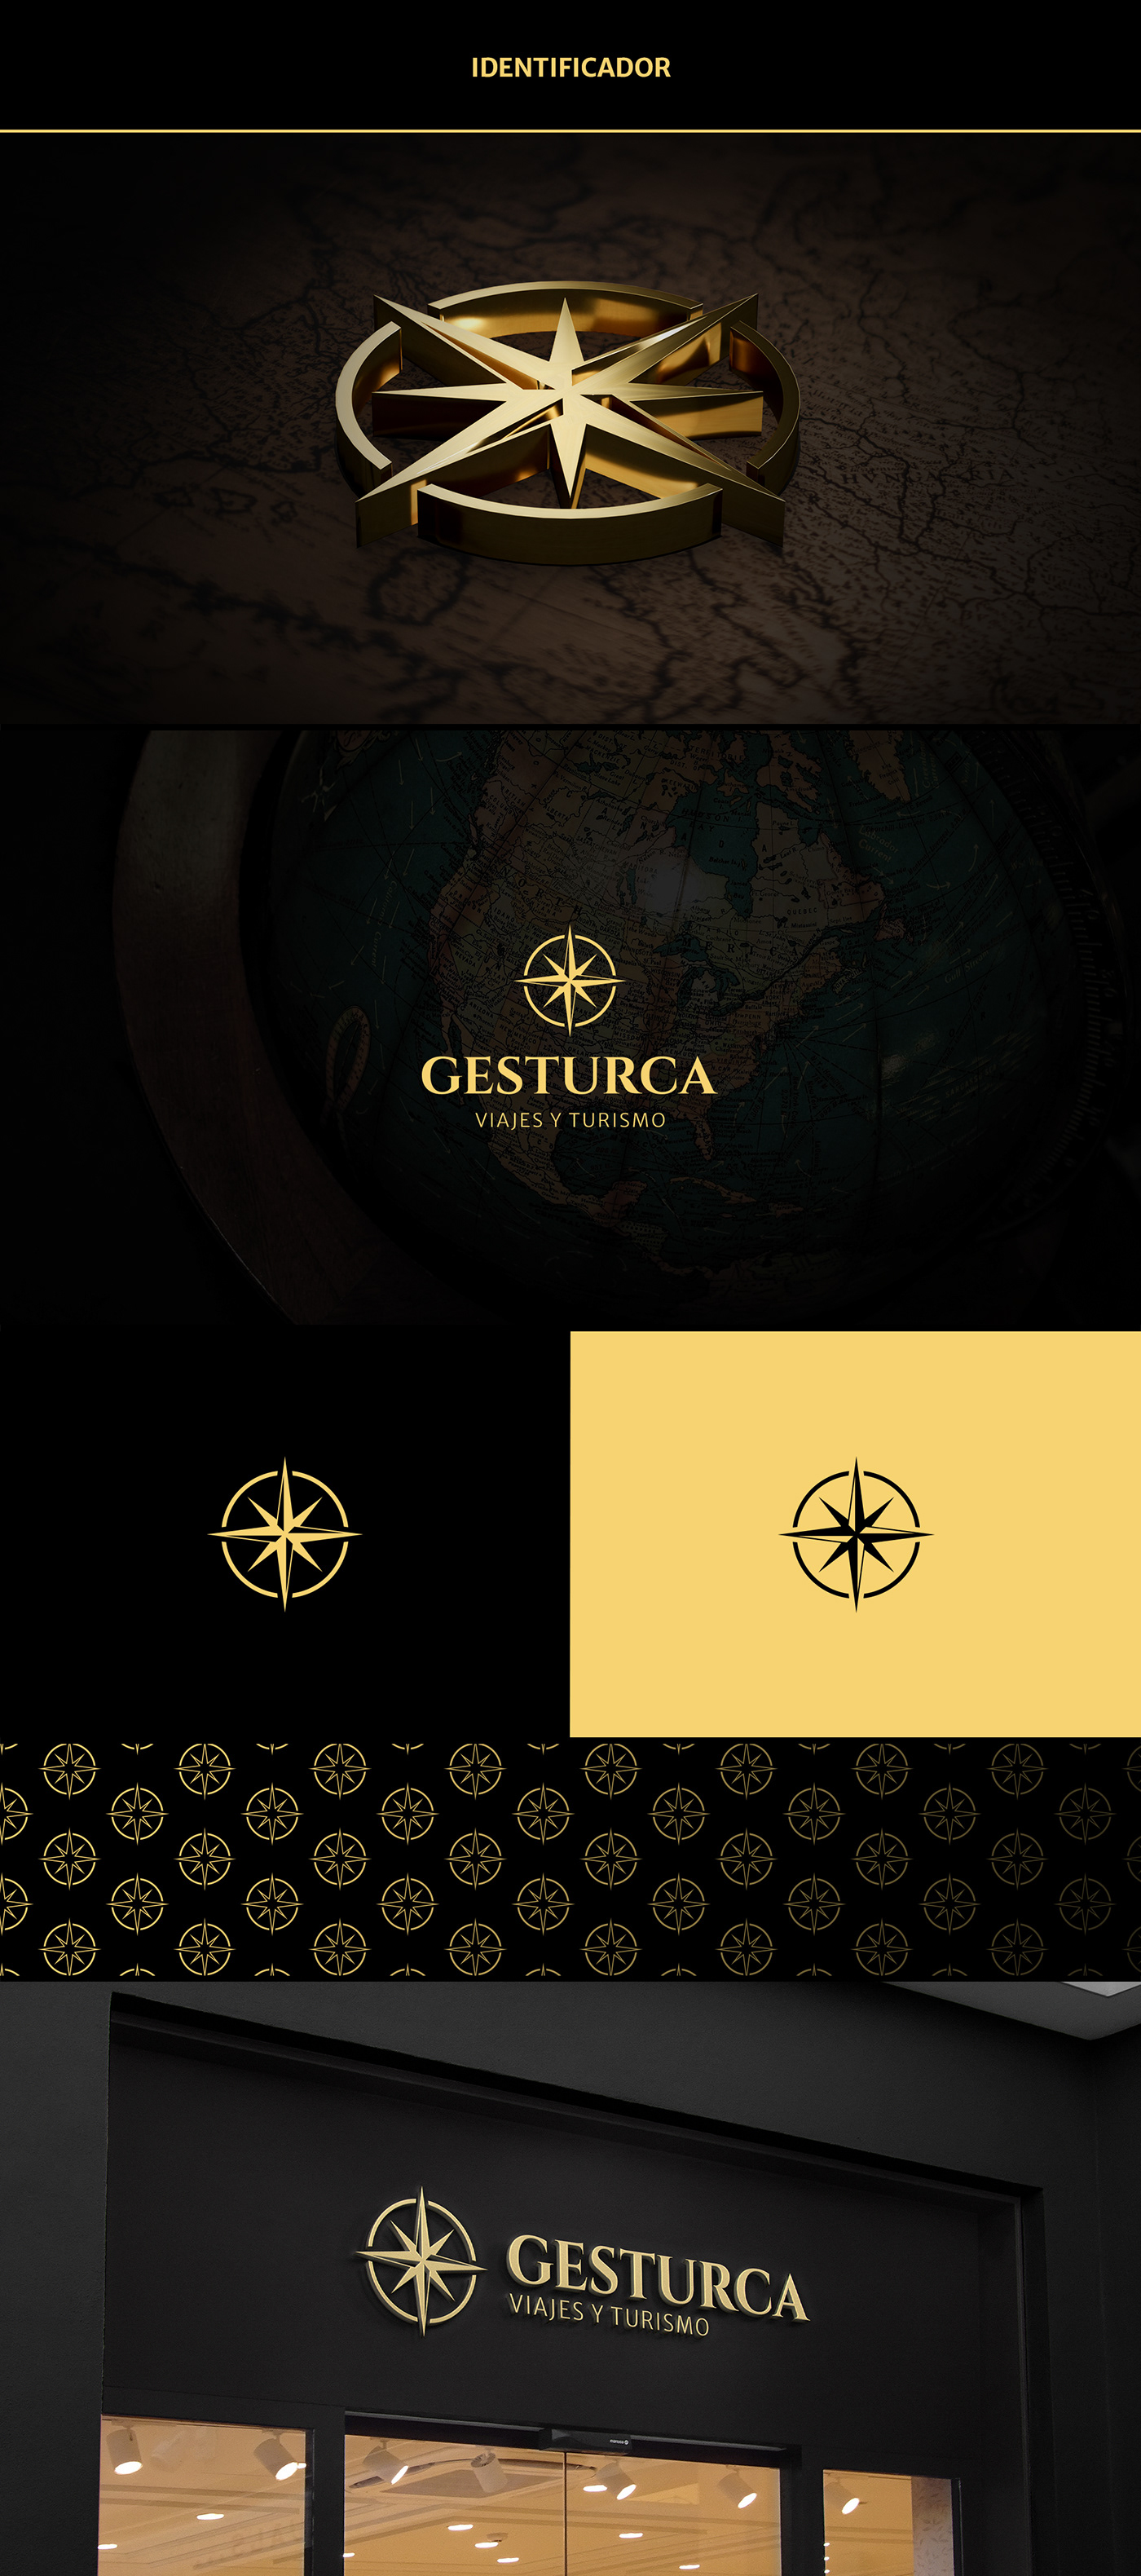 Logo design for the Gesturca travel agency